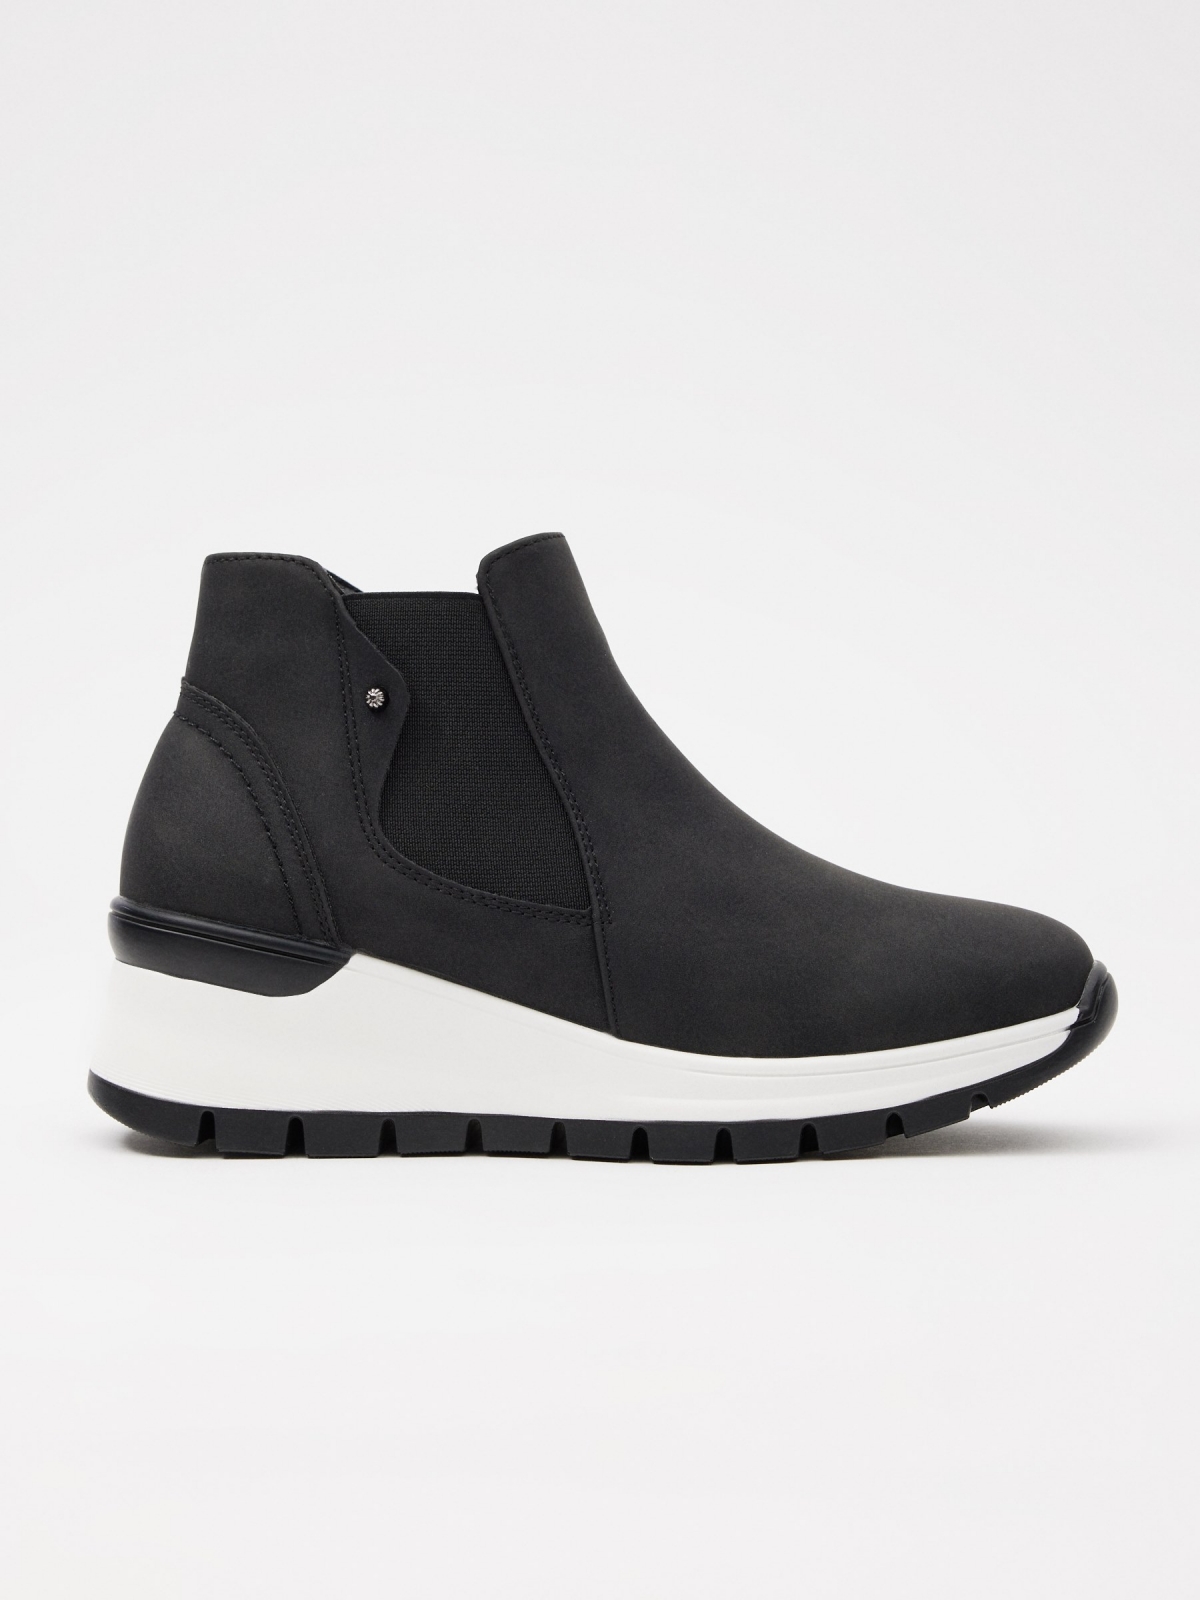 Sneaker boot style black